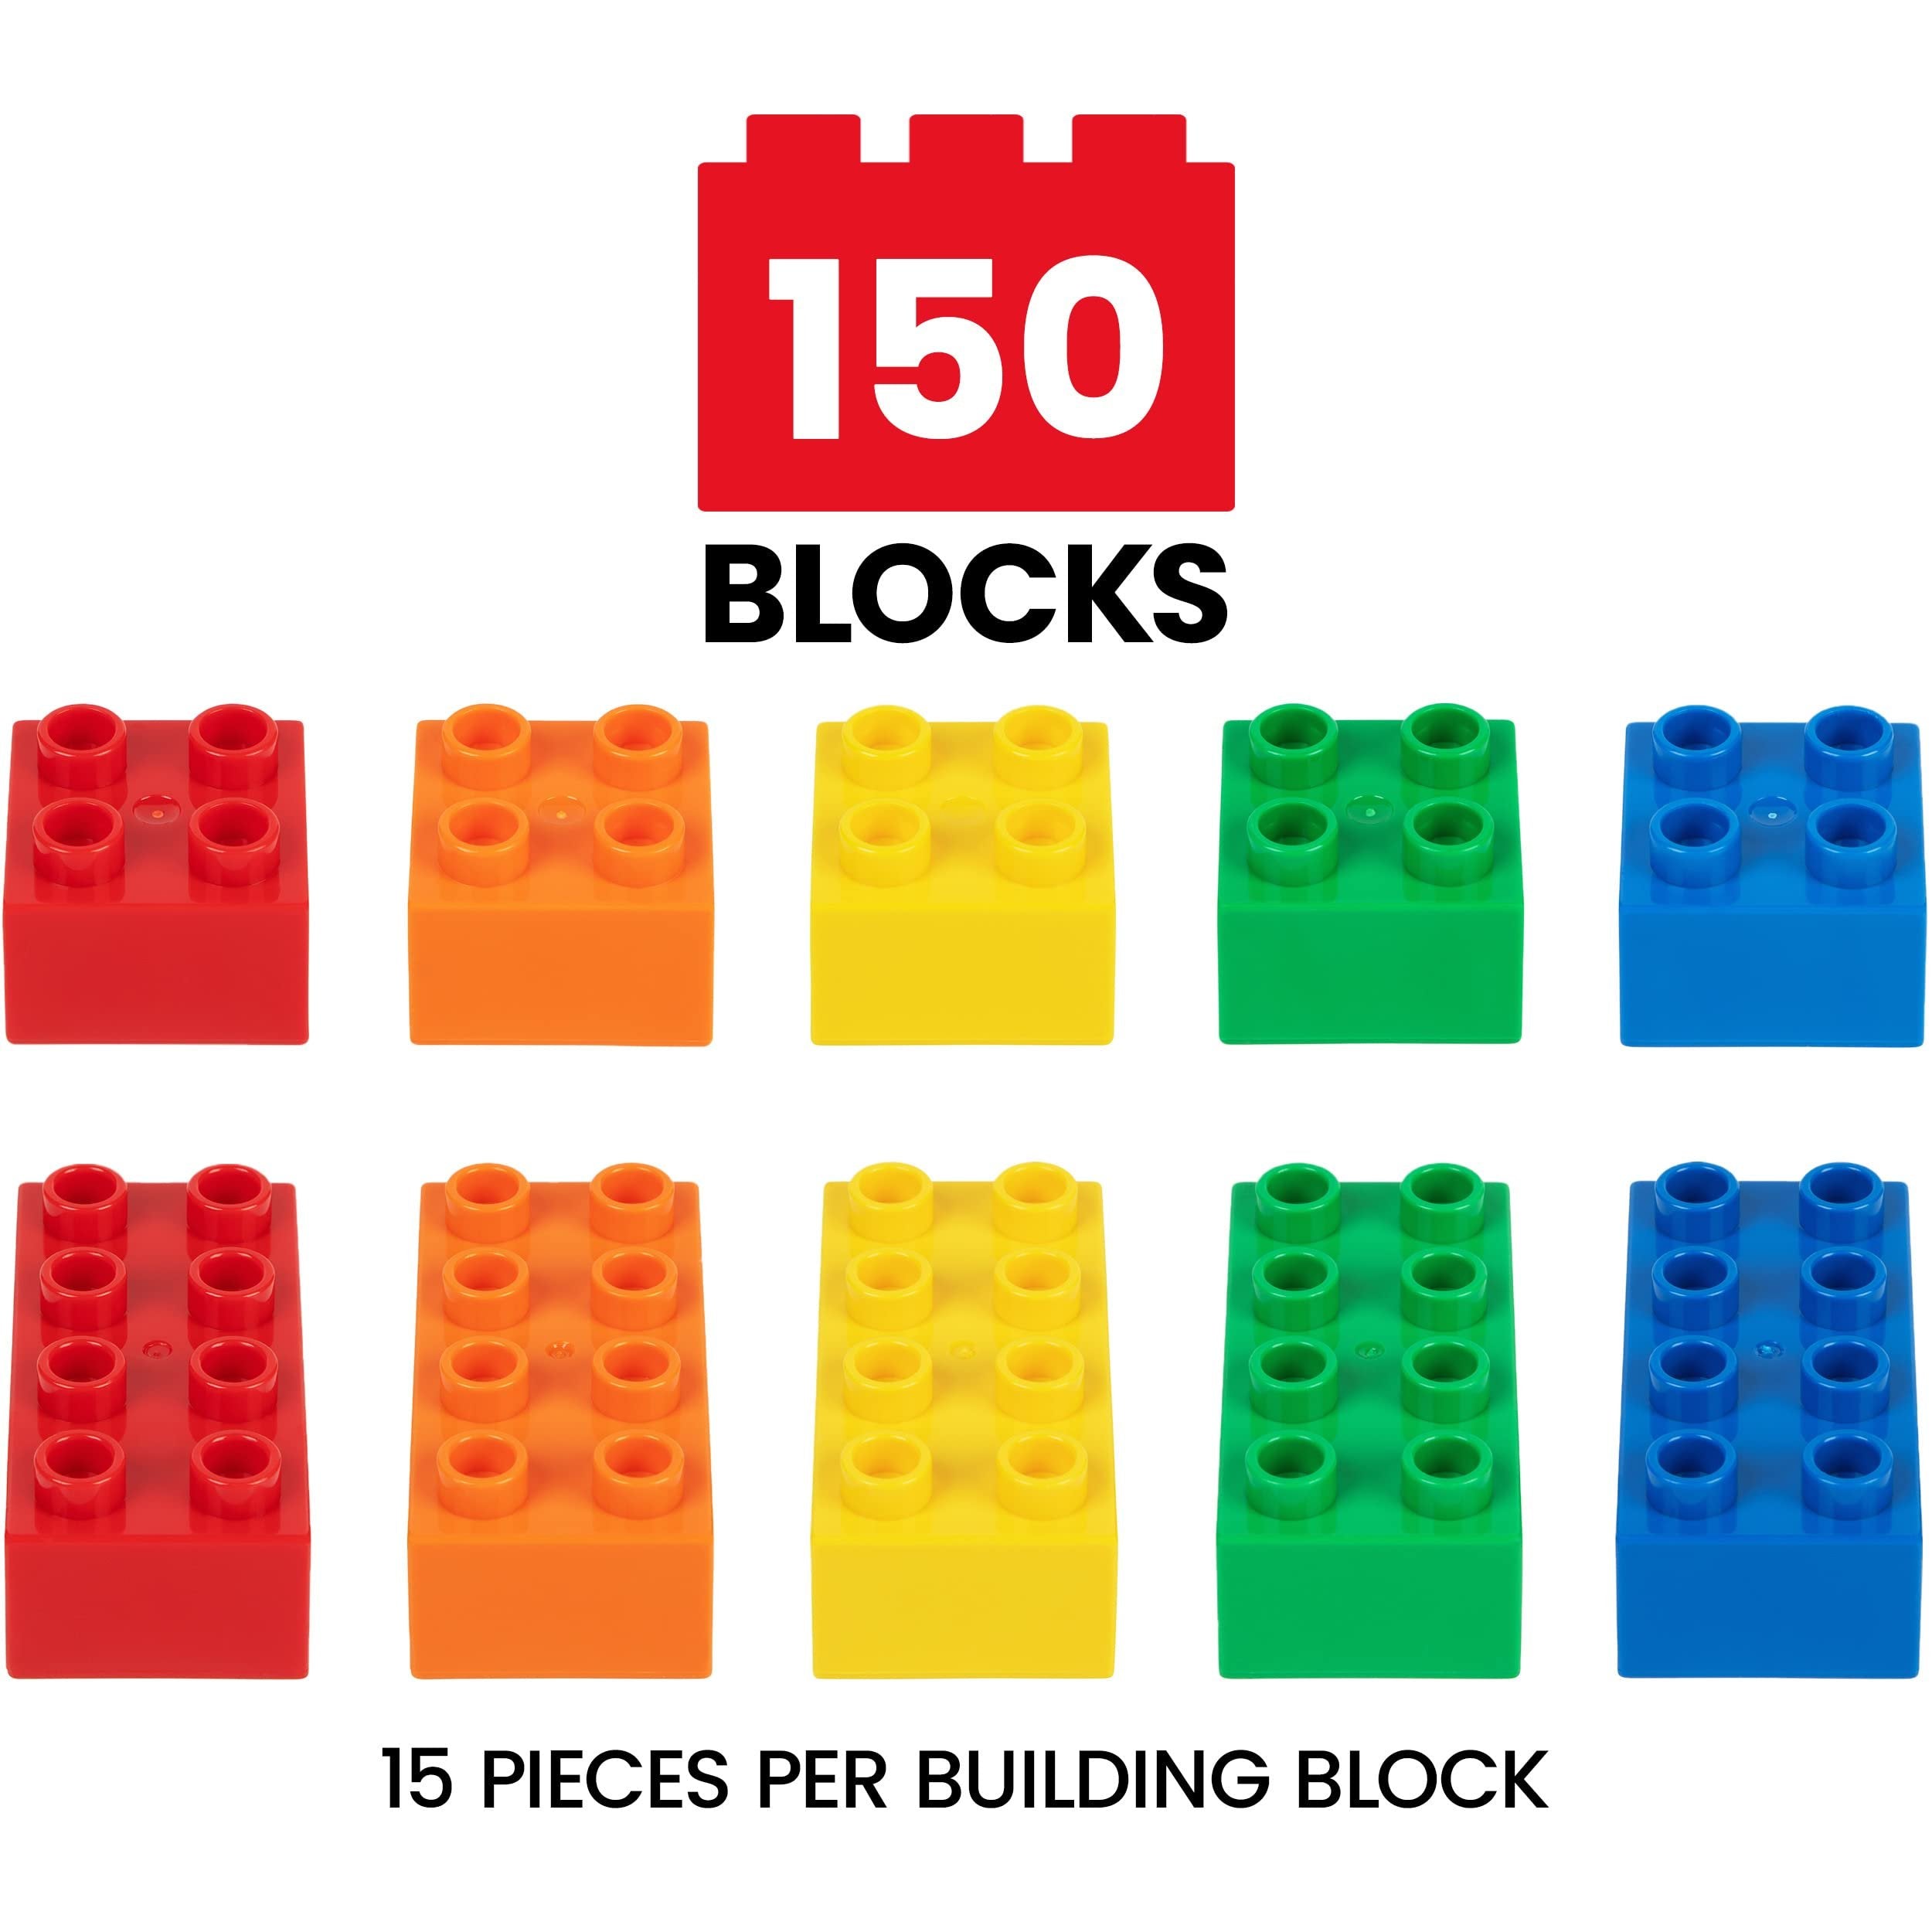 PREXTEX 100-Piece Mega Building Blocks Set - Compatible with Major Brands, For Ages 1-5